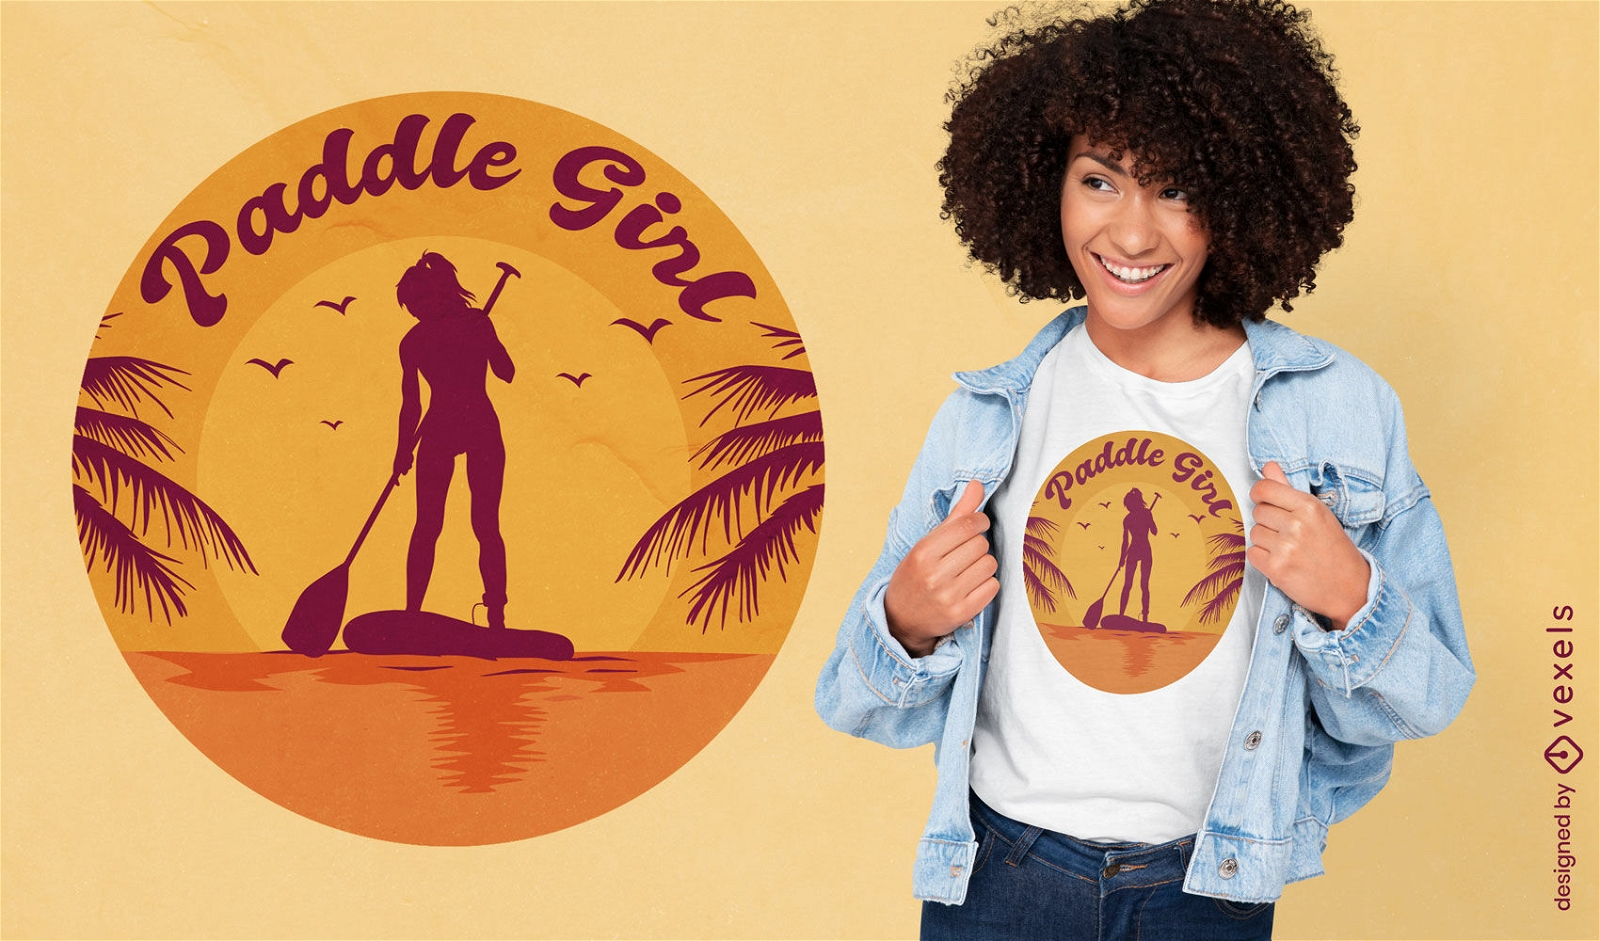 Paddle girl sports t-shirt design